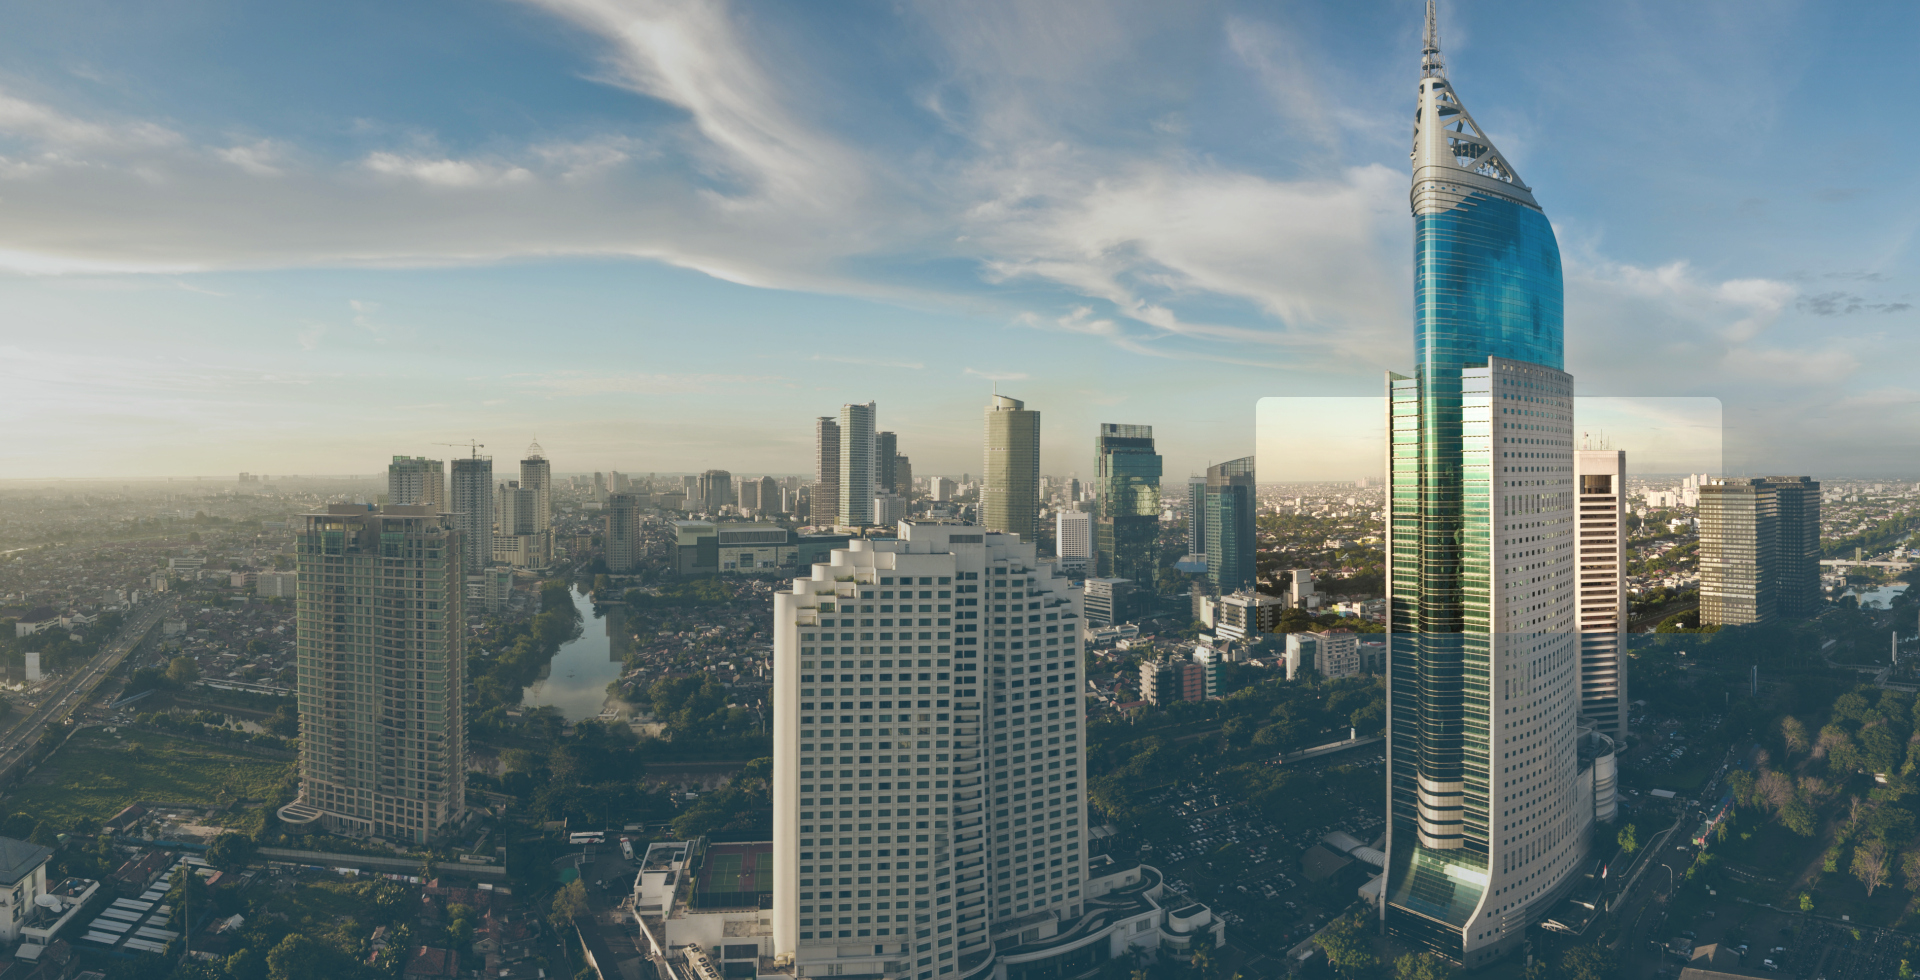 Indonesia's iconic buildings